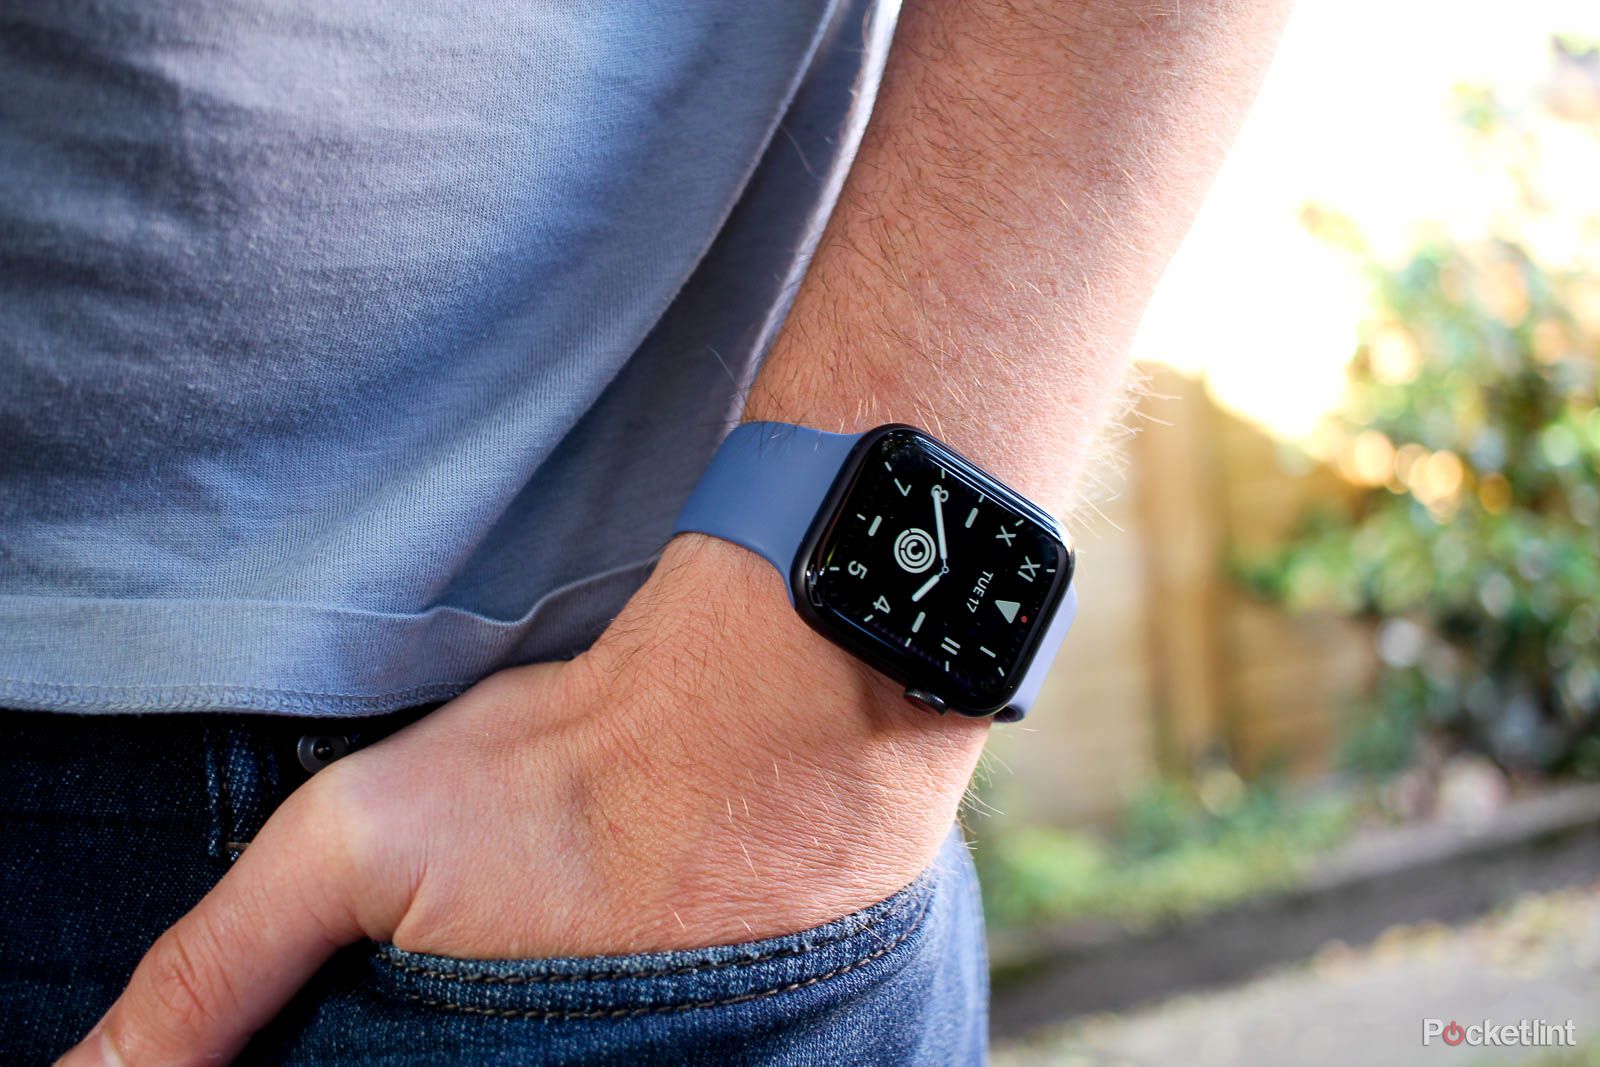 Apple Watch Series 5（GPS + Cellularモデル）